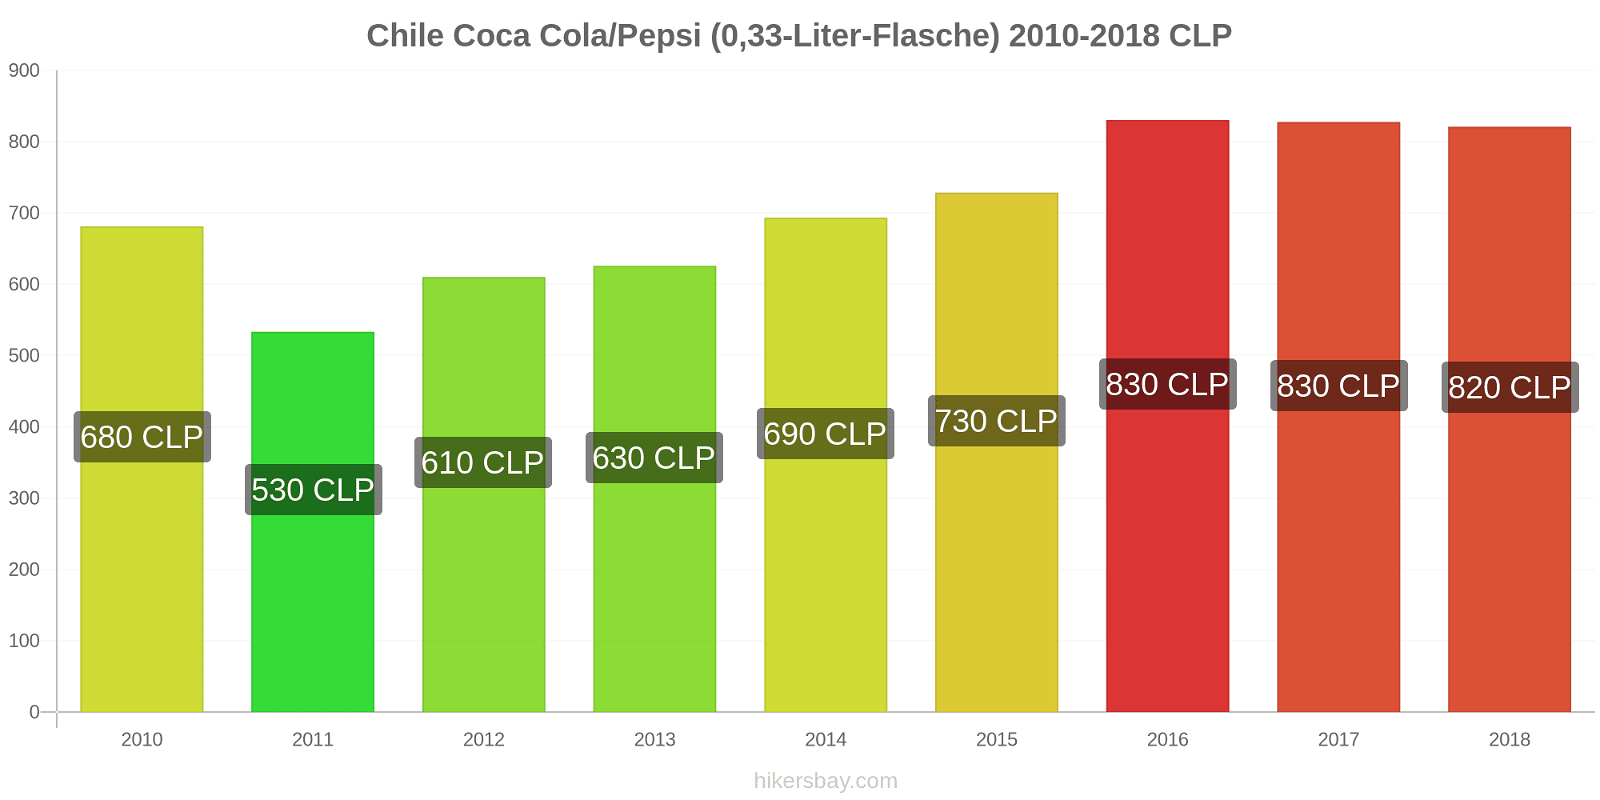 Chile Preisänderungen Coke/Pepsi (0,33-Liter-Flasche) hikersbay.com